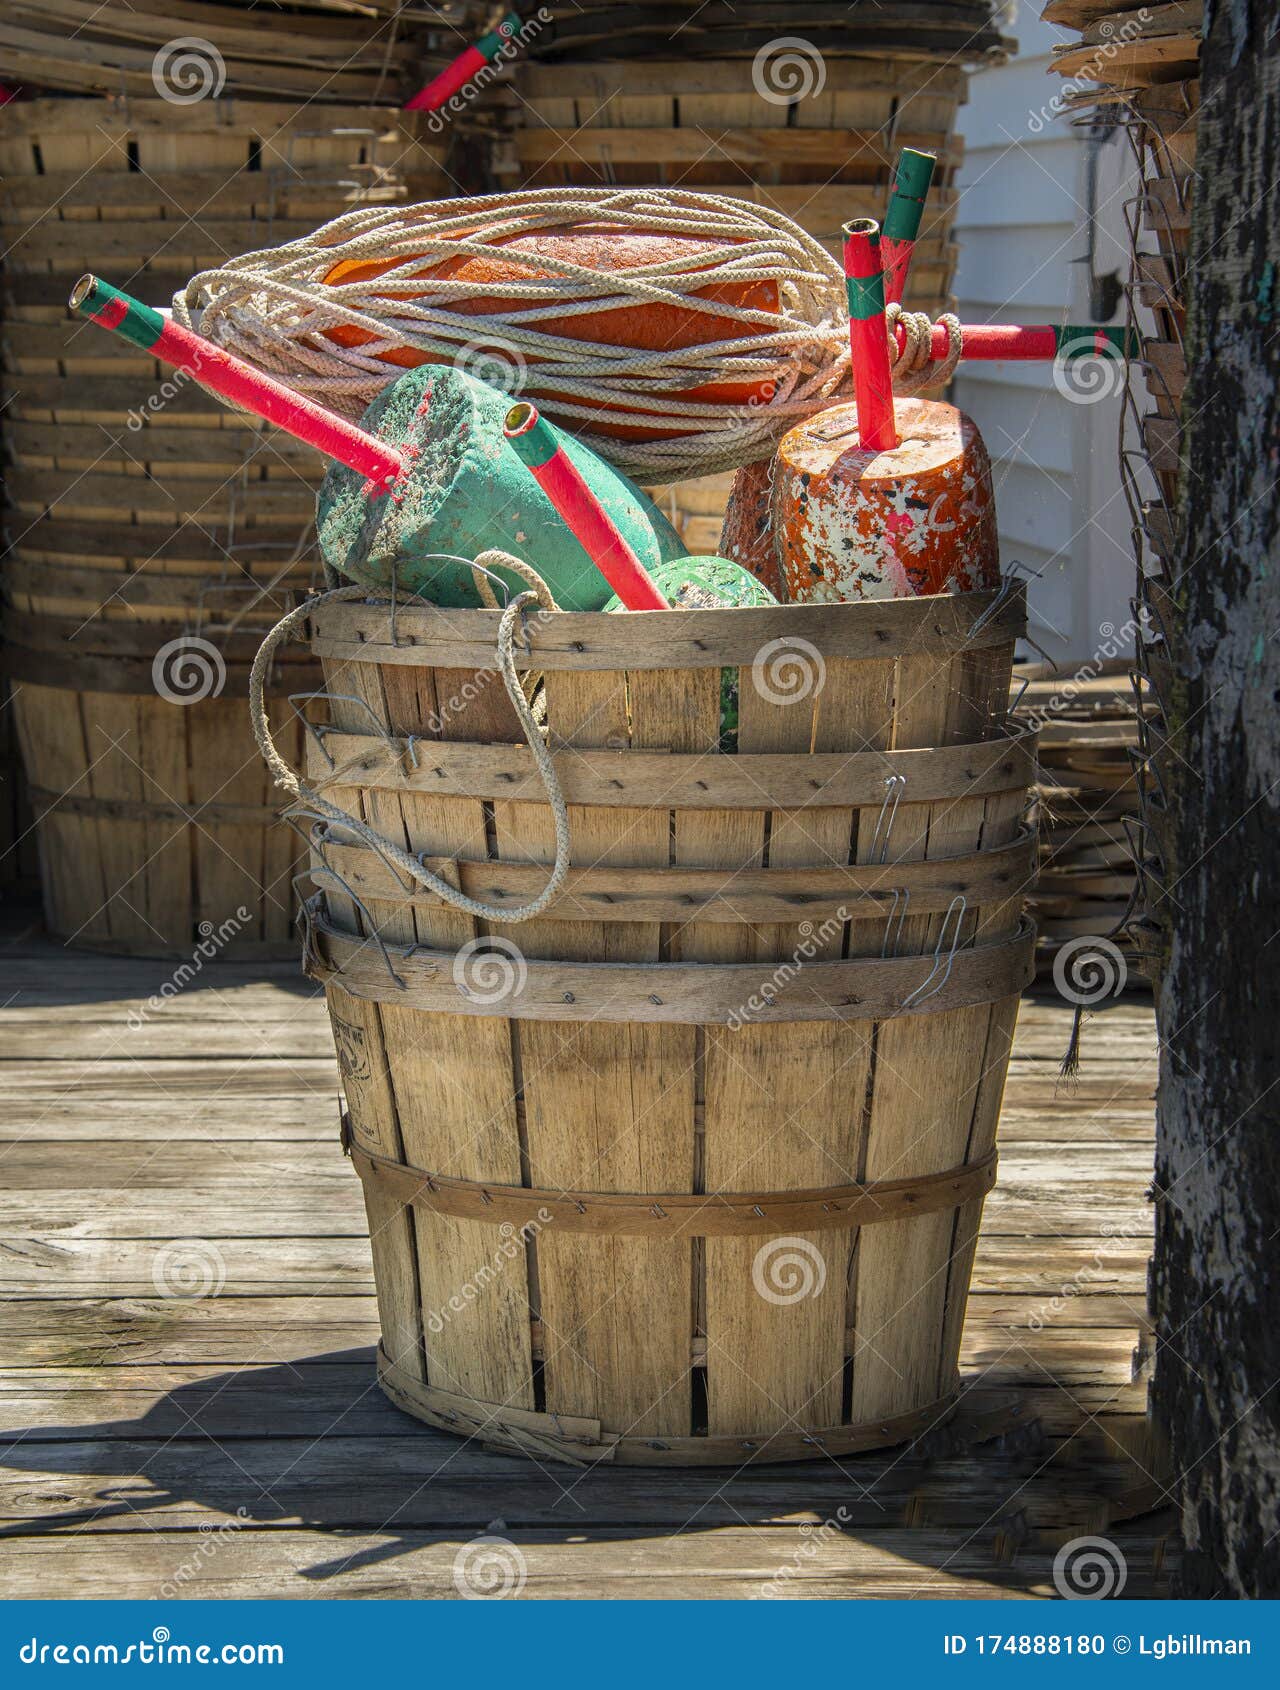 Crabpot Floats Stacked in Wooden Bushel Baskets on Pier Stock Photo - Image  of crabshack, pier: 174888180